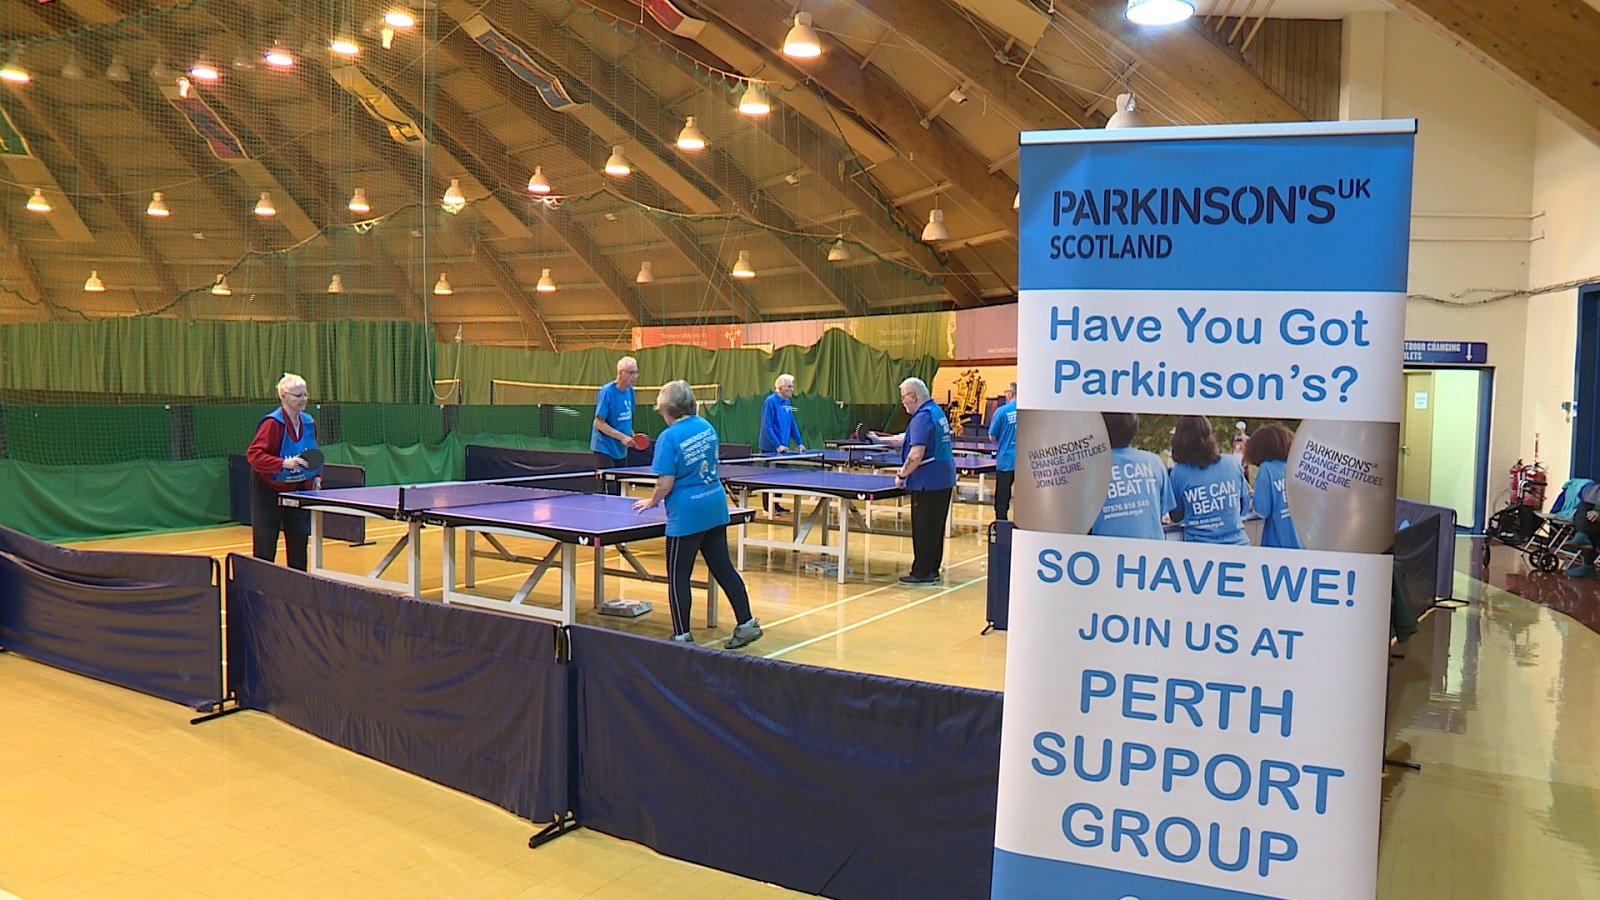 Playing Ping-Pong Through Parkinson's